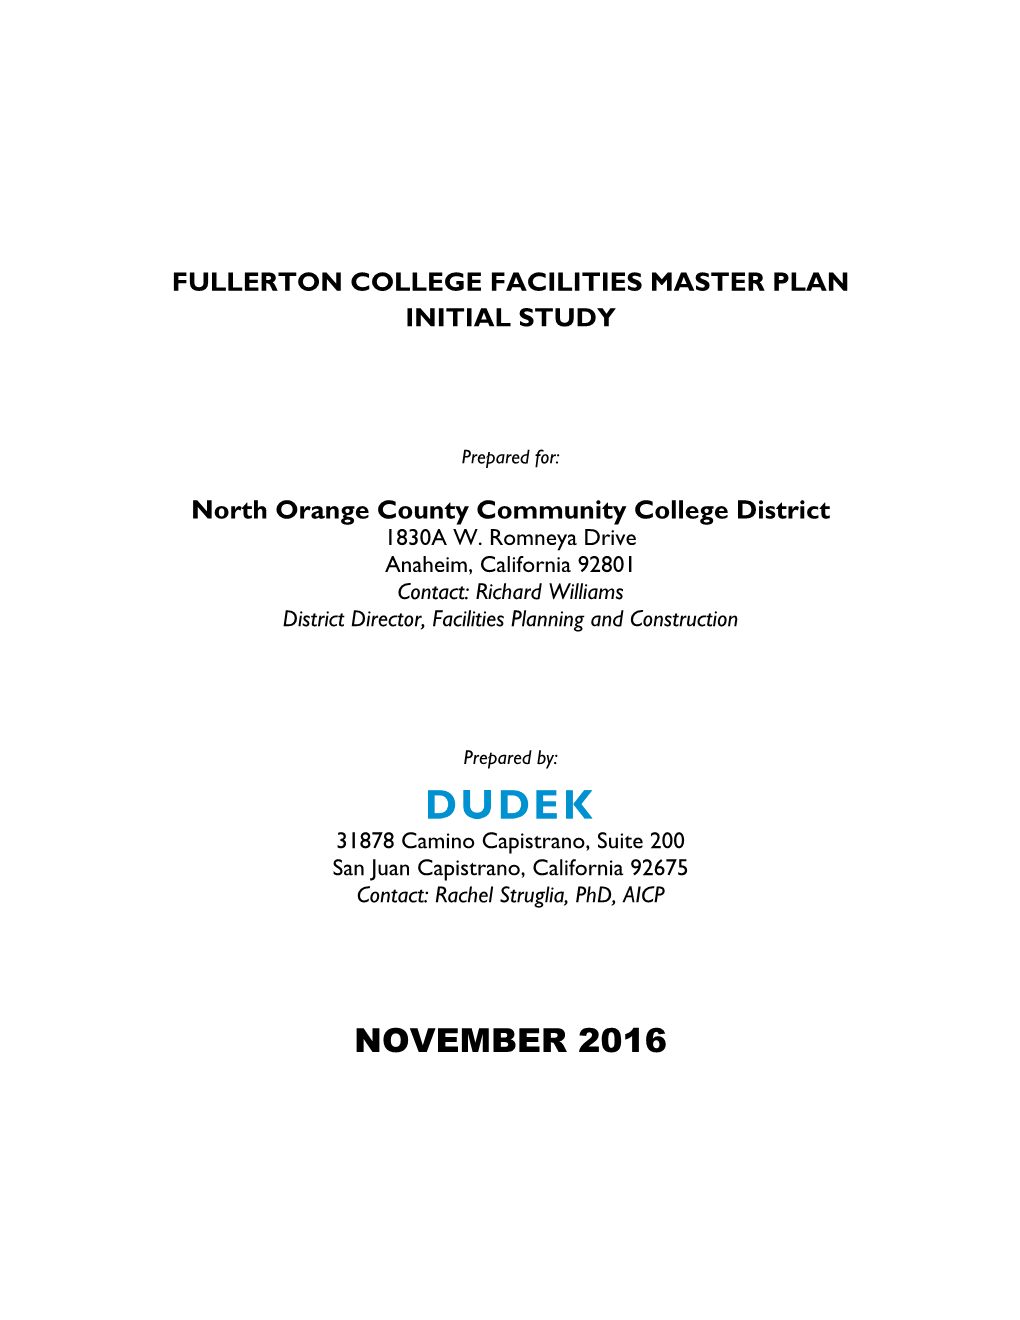 Fullerton College Initial Study